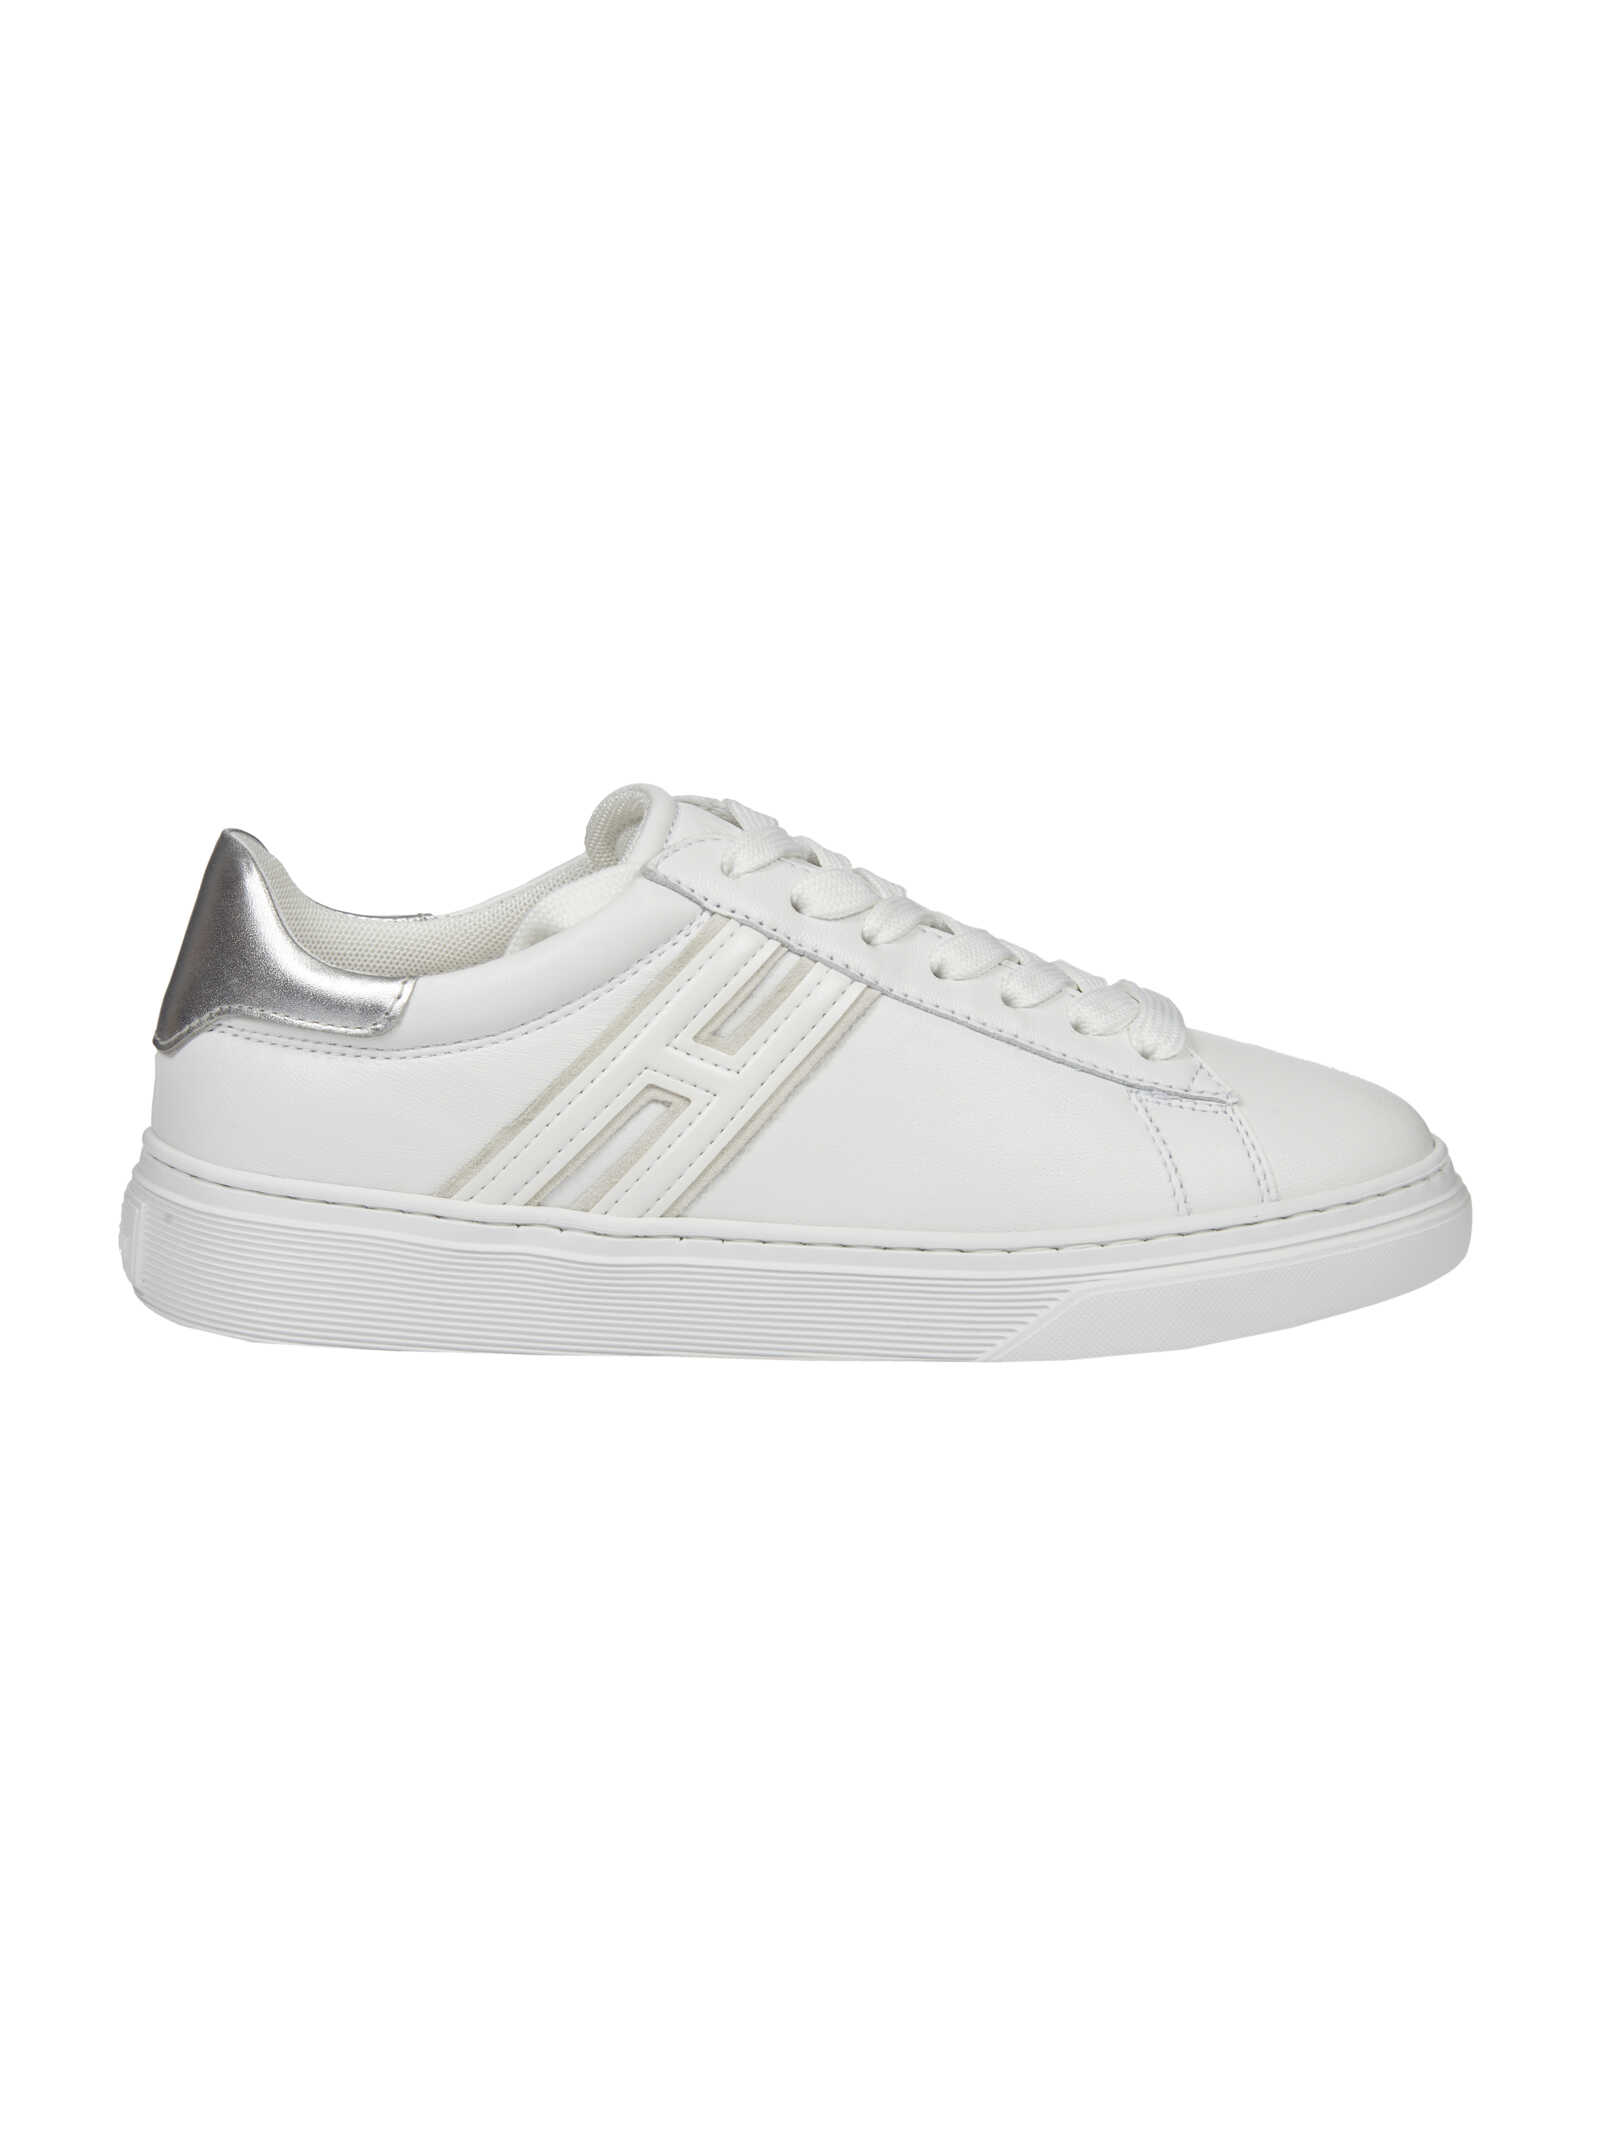 Hogan H365 Sneakers White